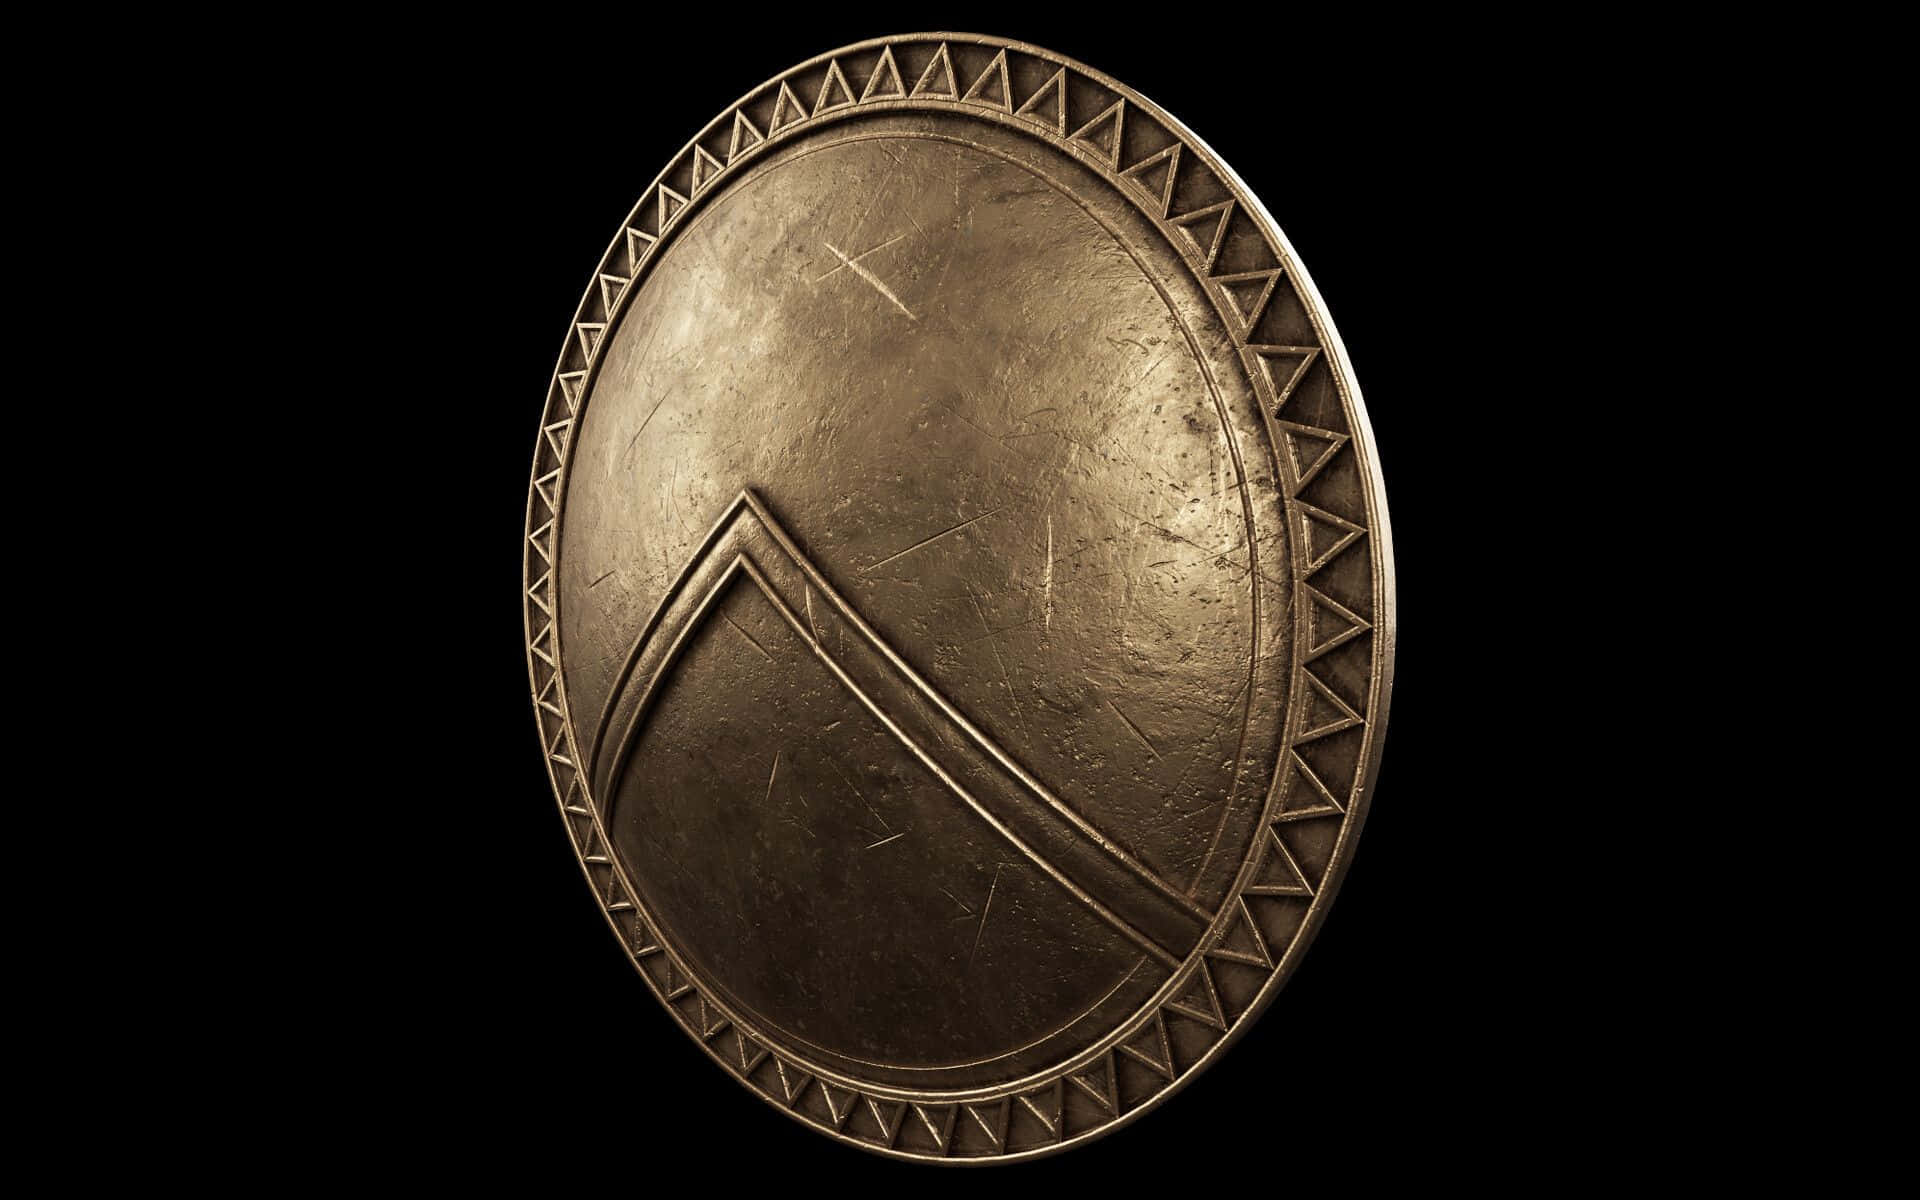 Majestic Shield on Grunge Background